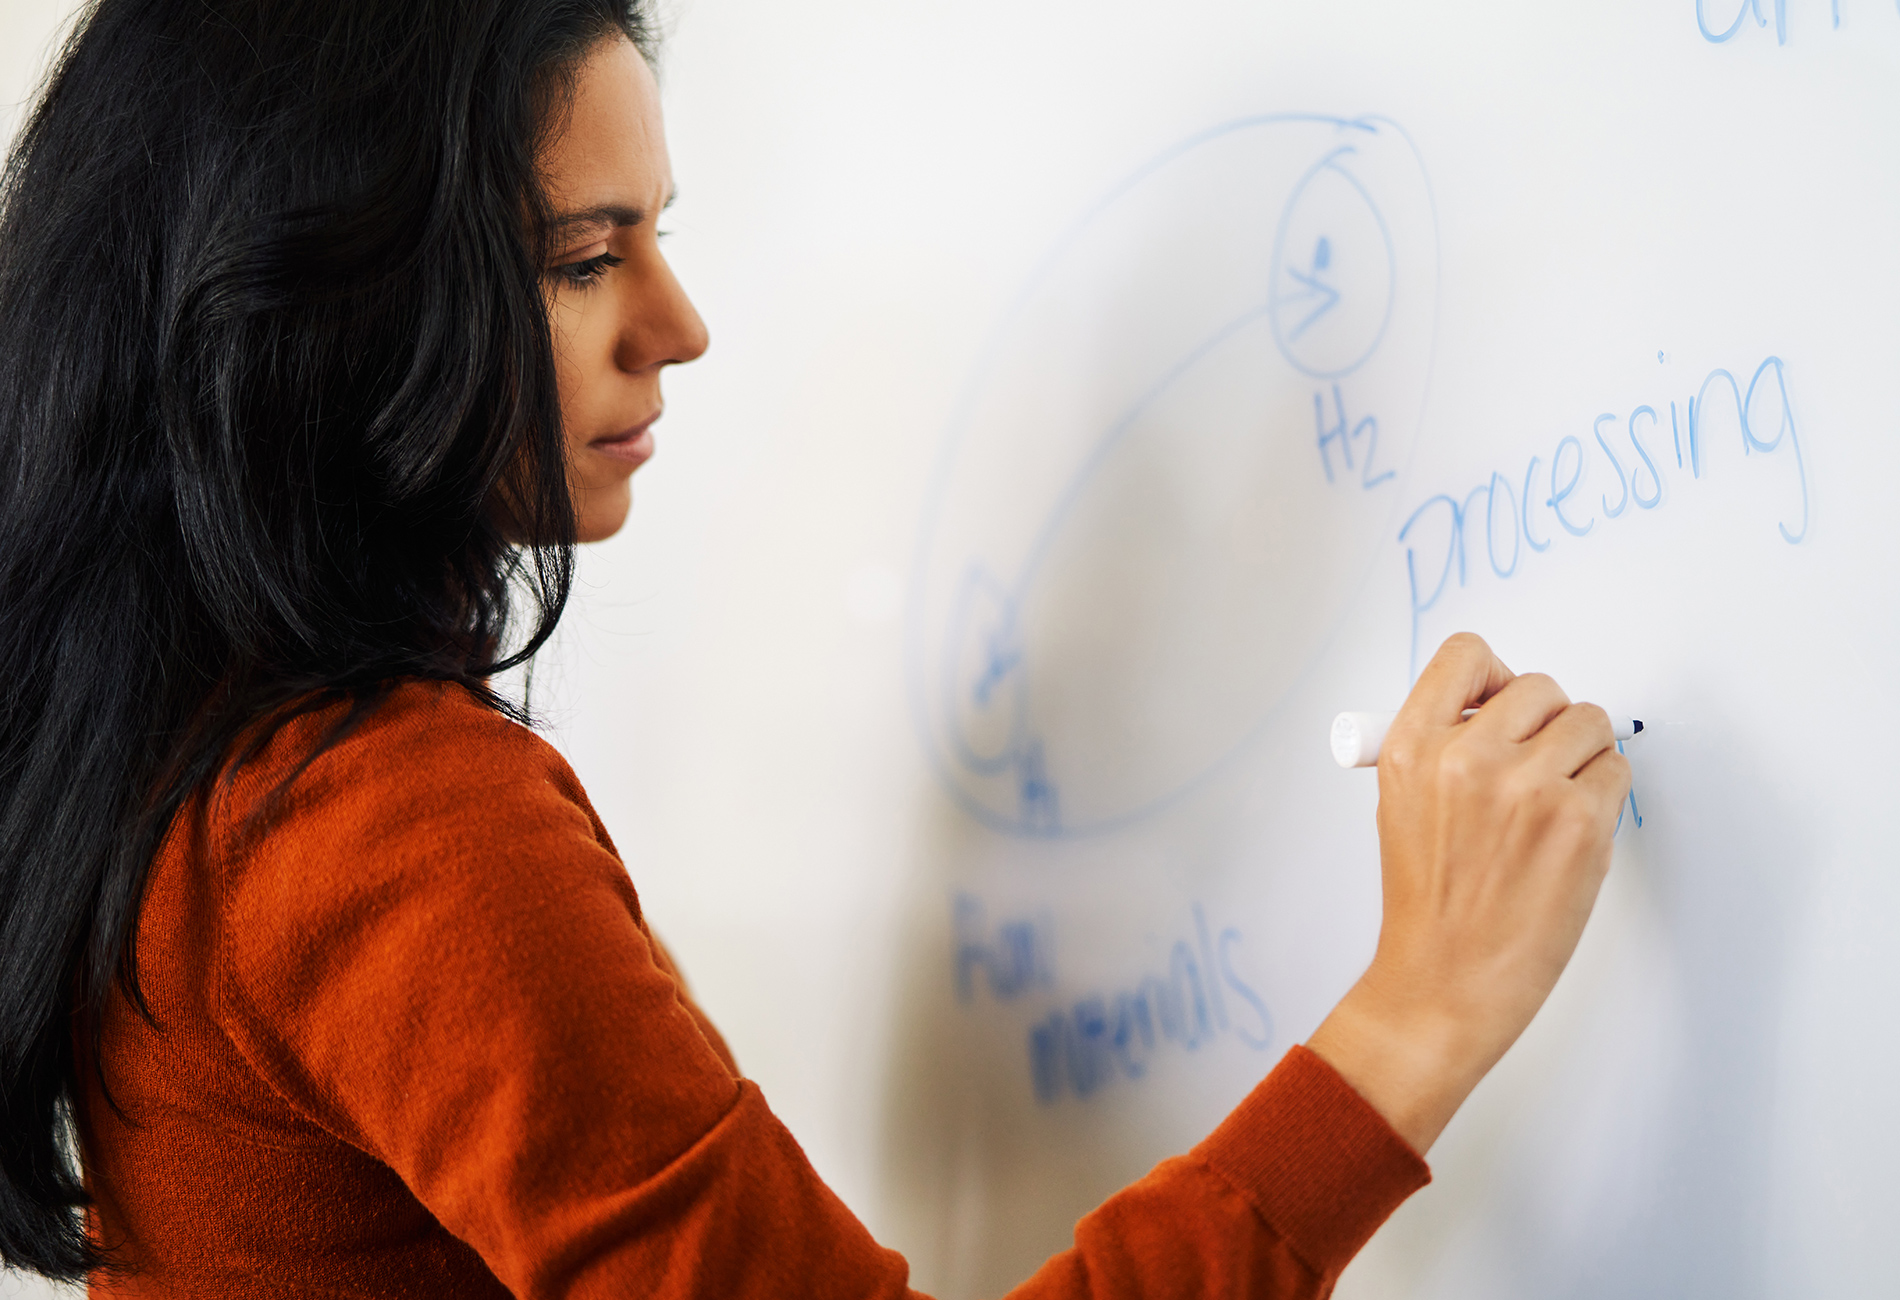 A female student writes on a smartboard